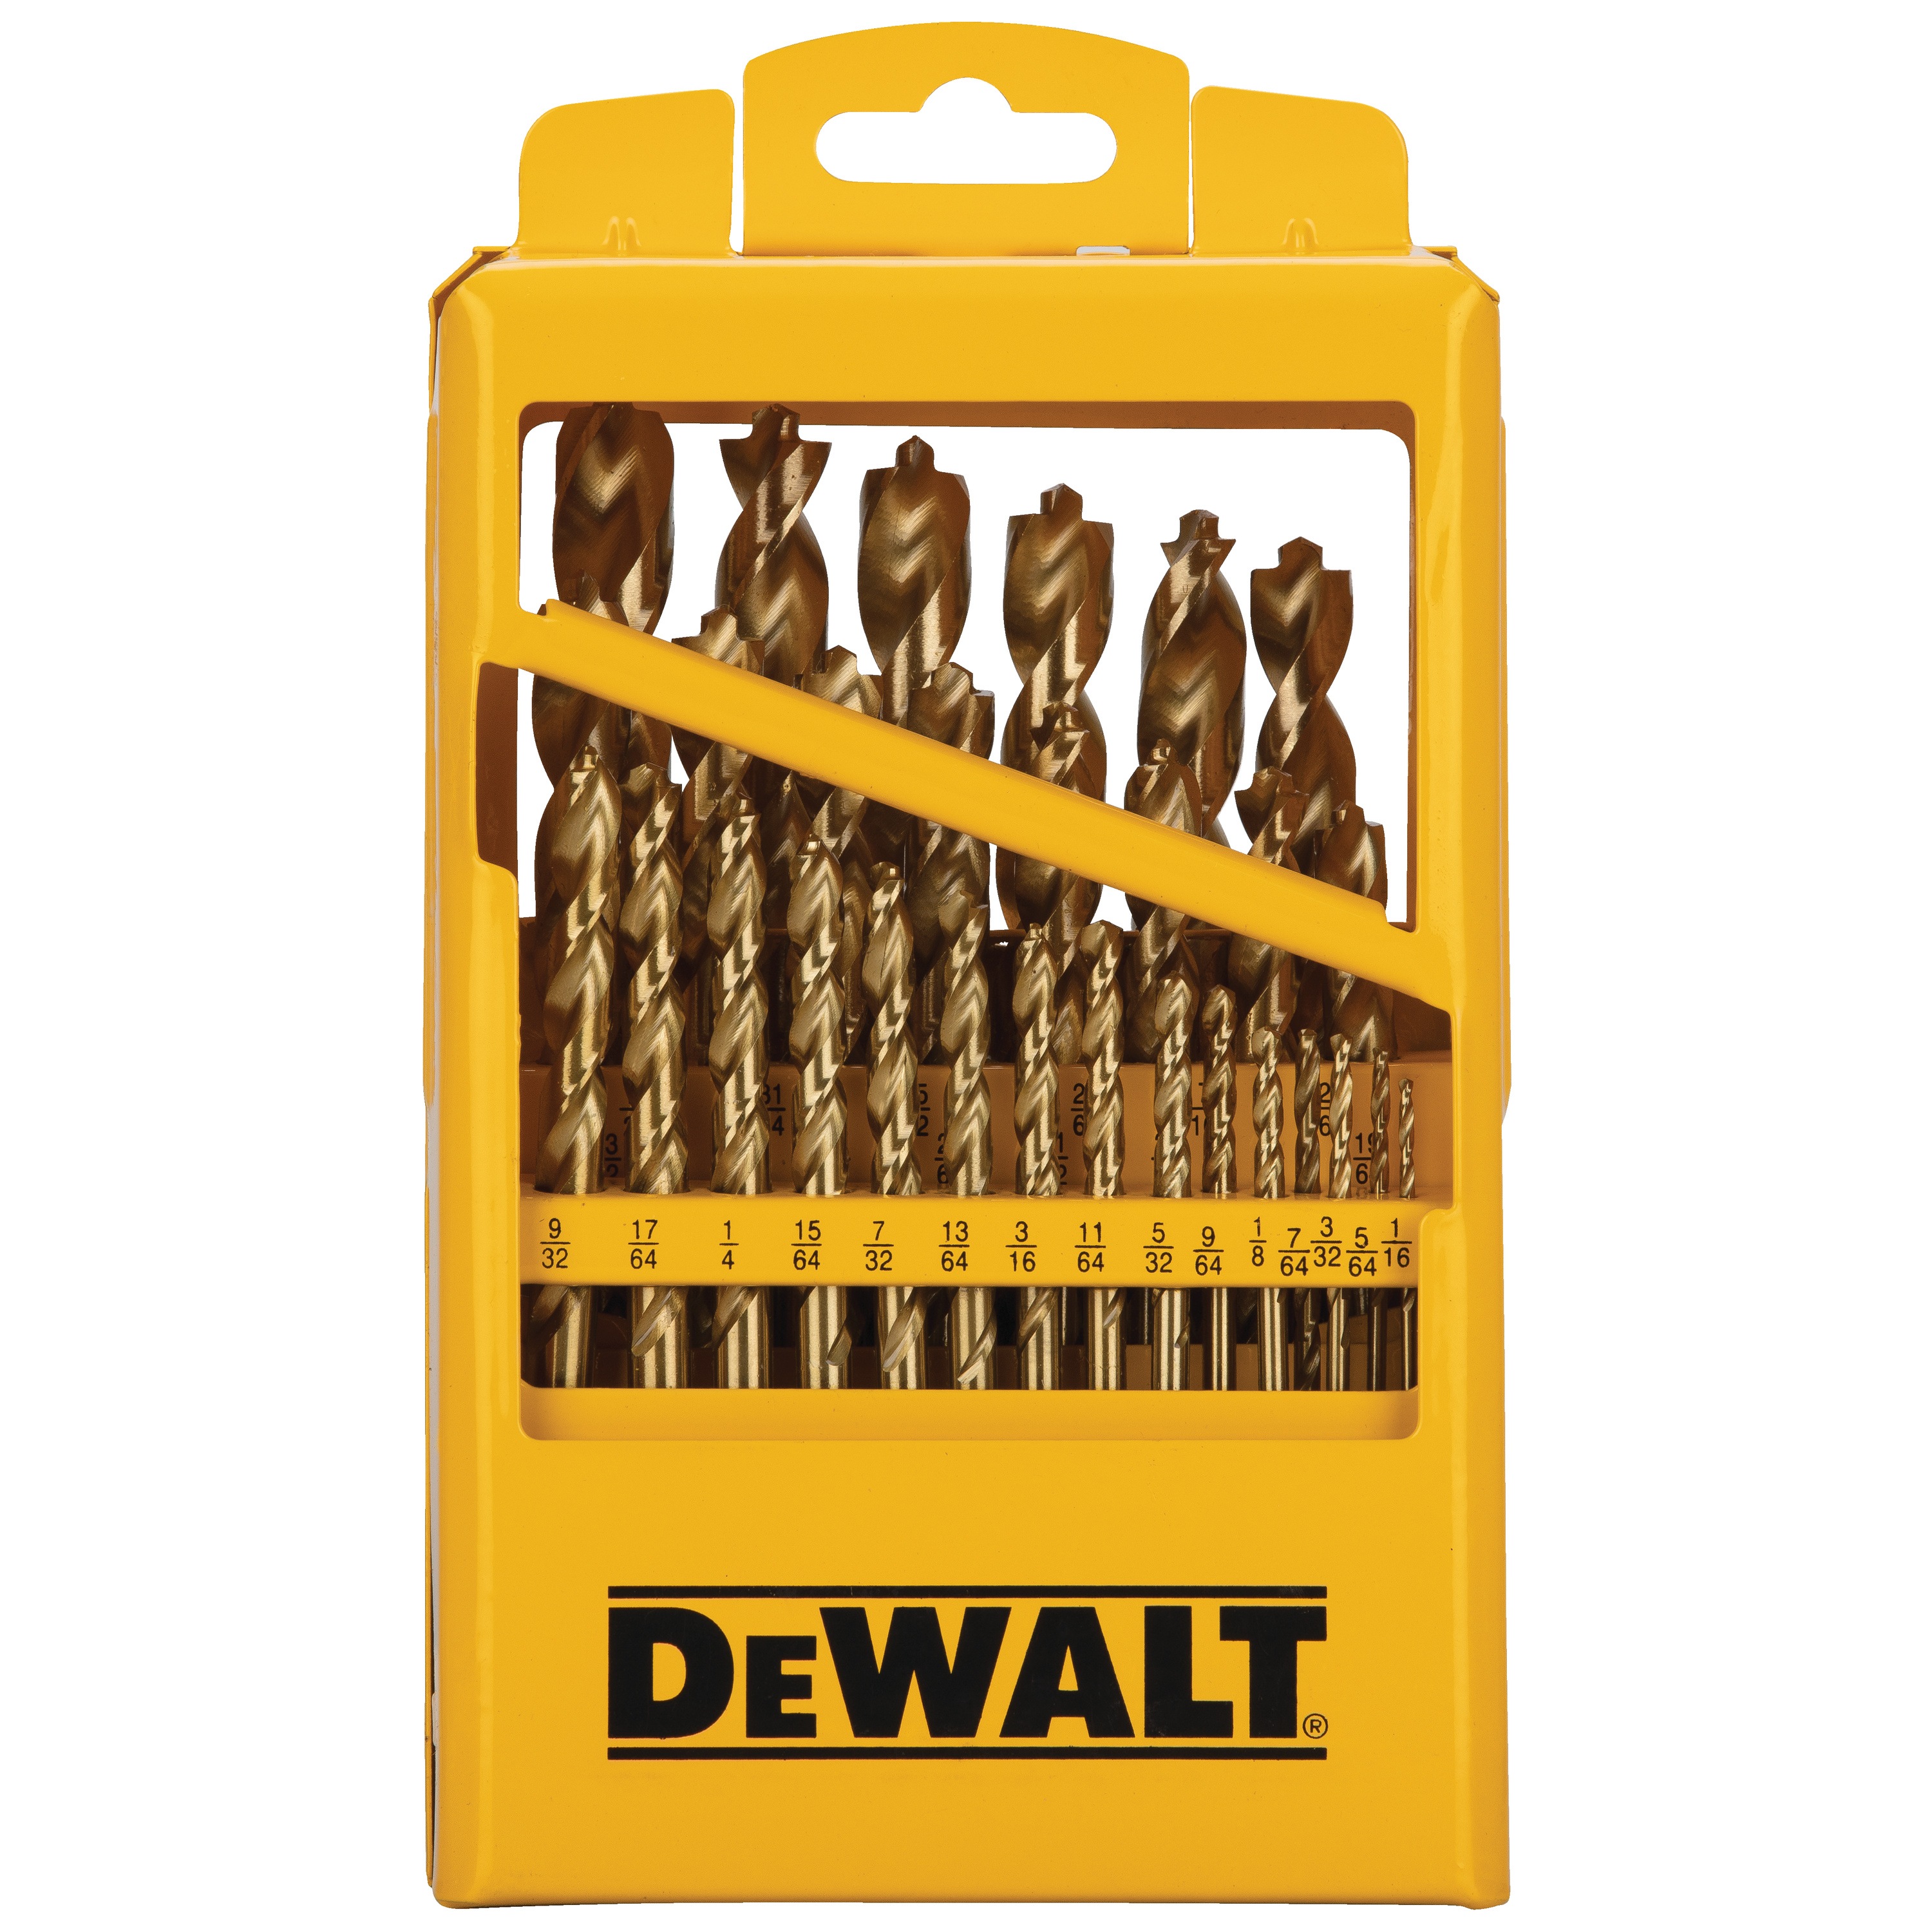 DEWALT - Titanium Nitride Coating PP Drill Bit Set 29 pc - DW1369